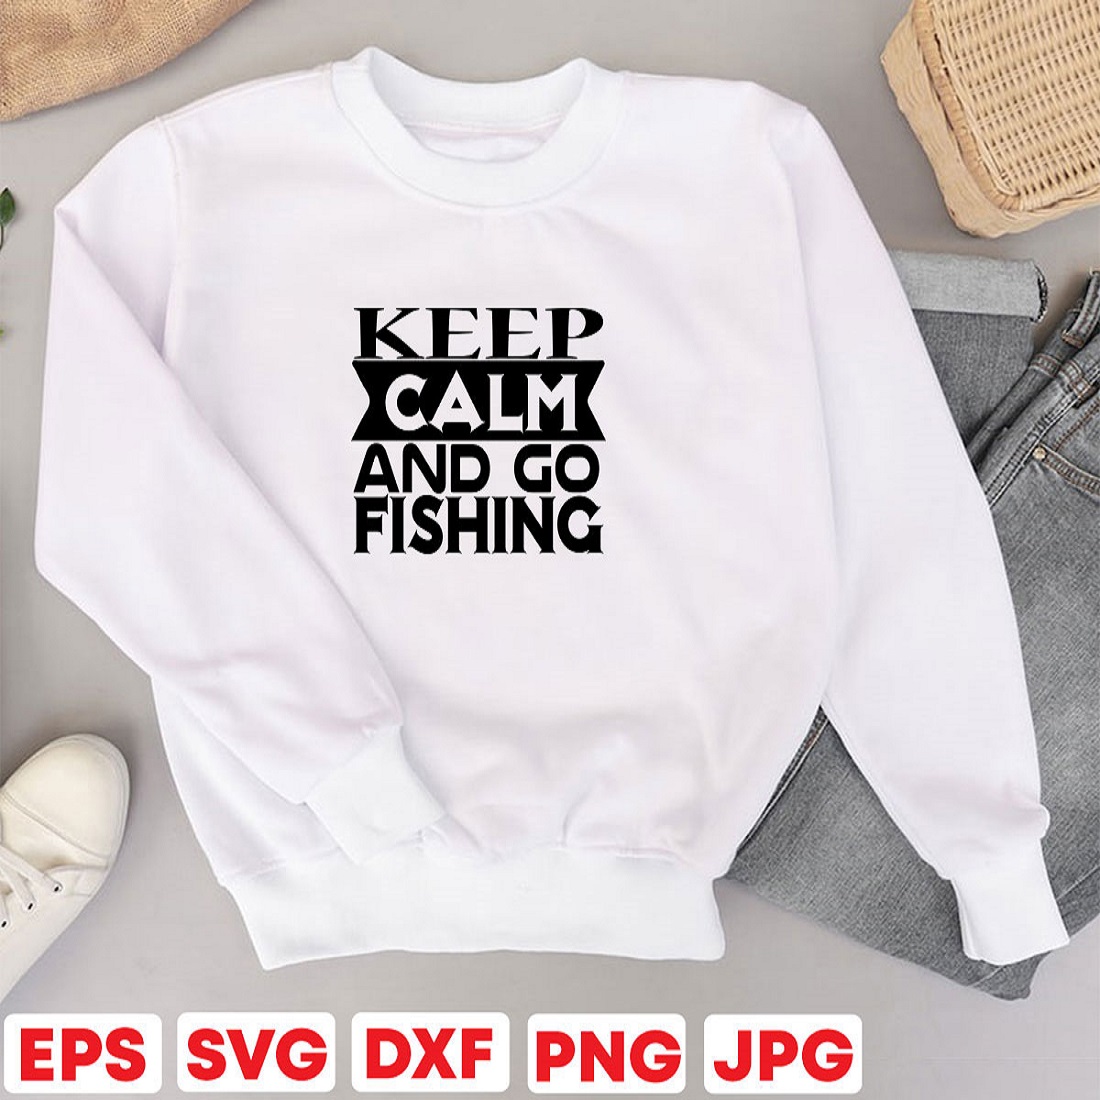 keep calm and fishing jj 383